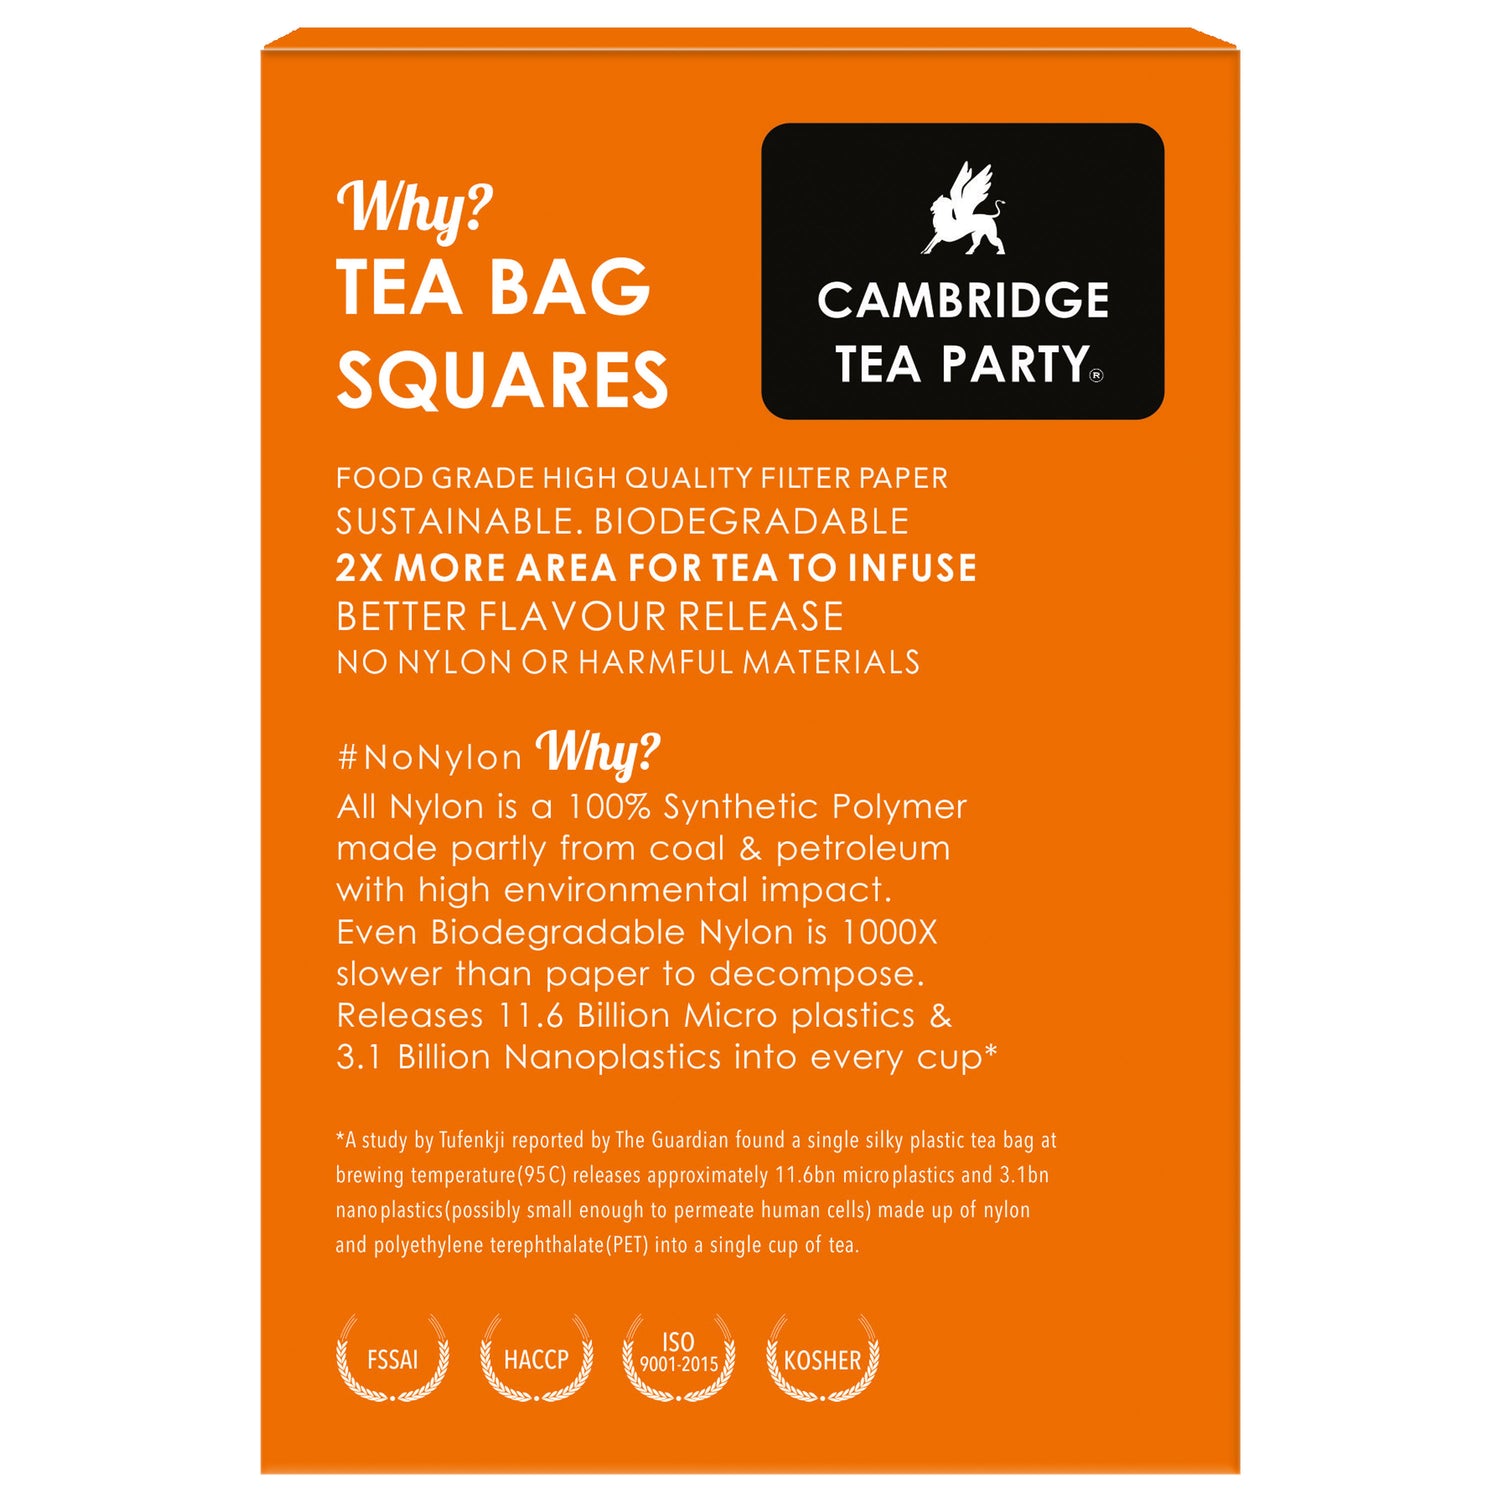 Slim 30 Tea Bags, Hibiscus Clove Orange Rose Turmeric Cinnamon Tulsi Green Tea 